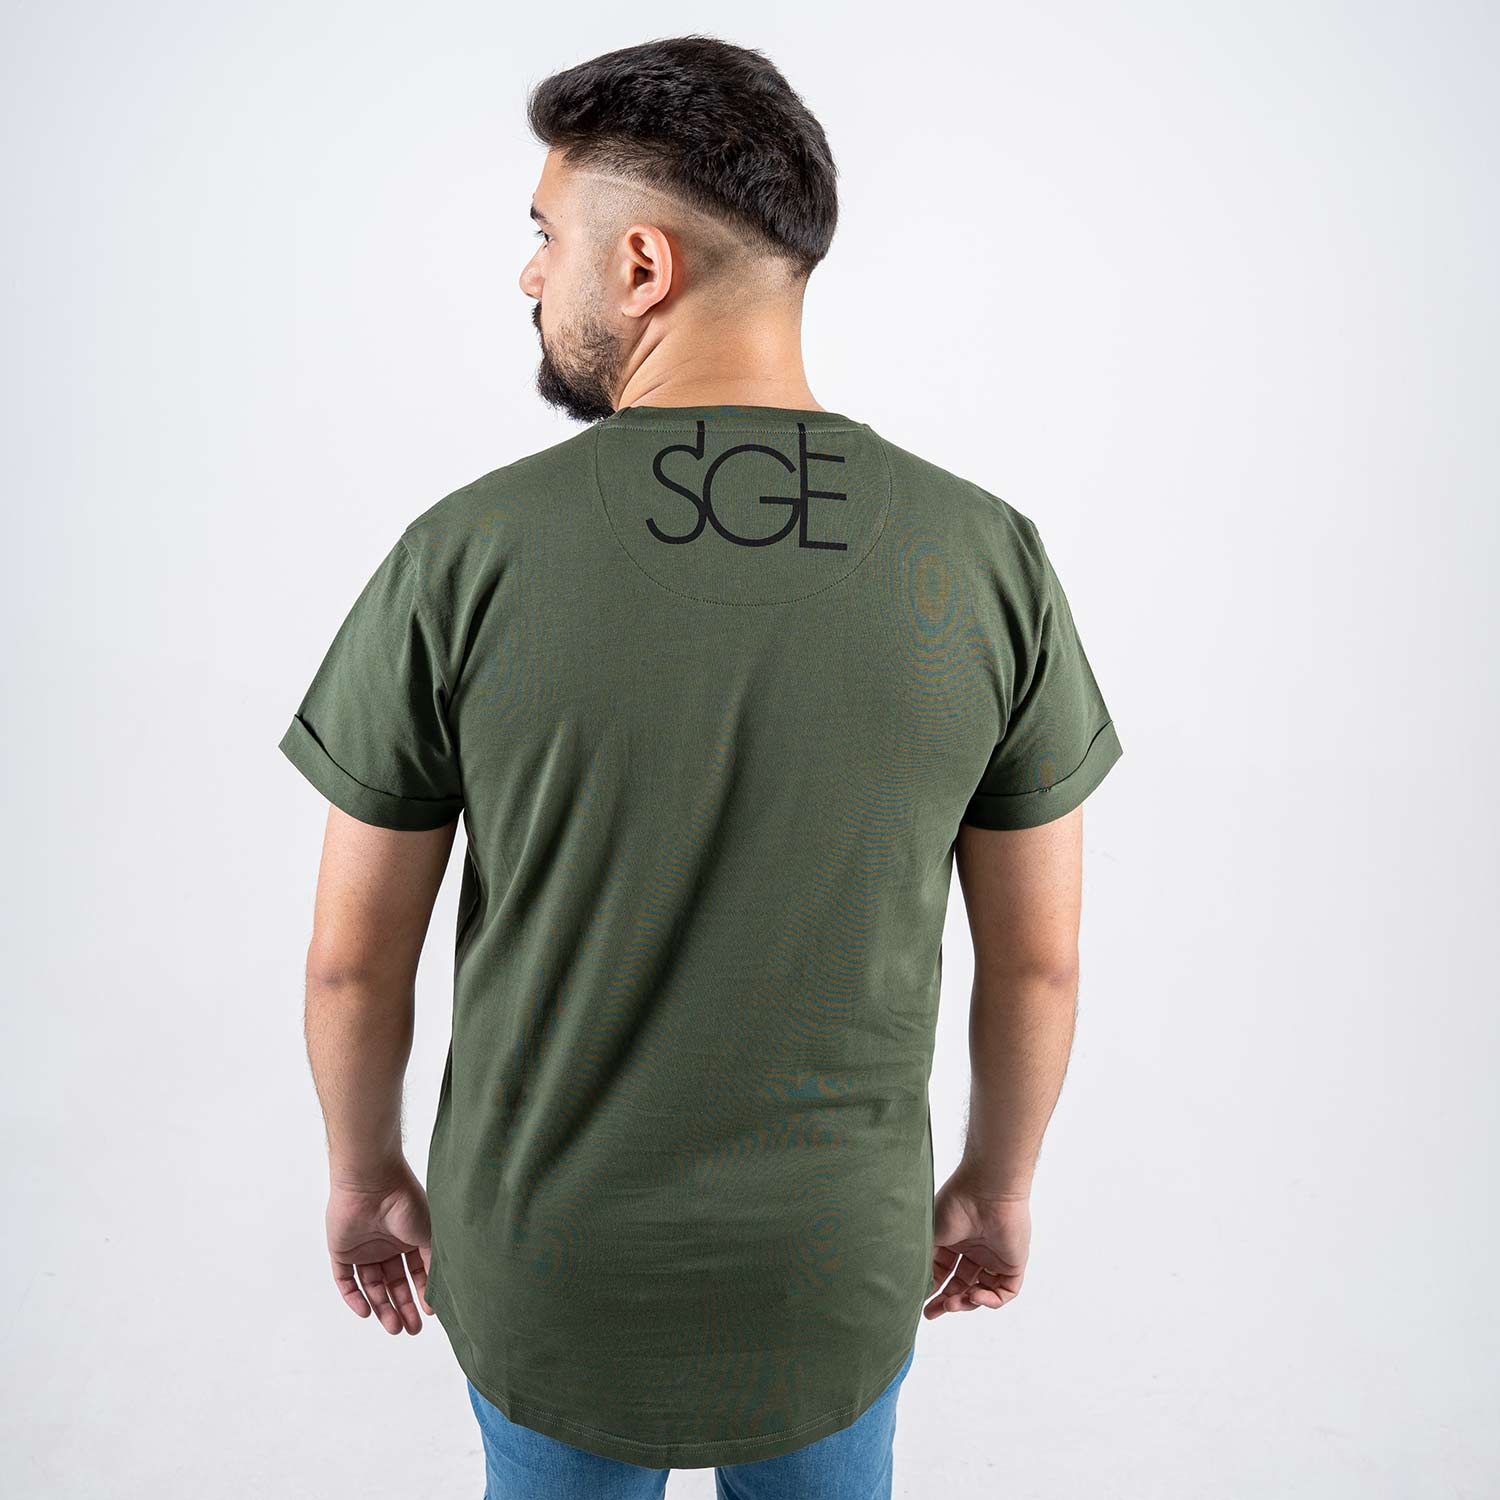 Bild 6: T-Shirt SGE olive